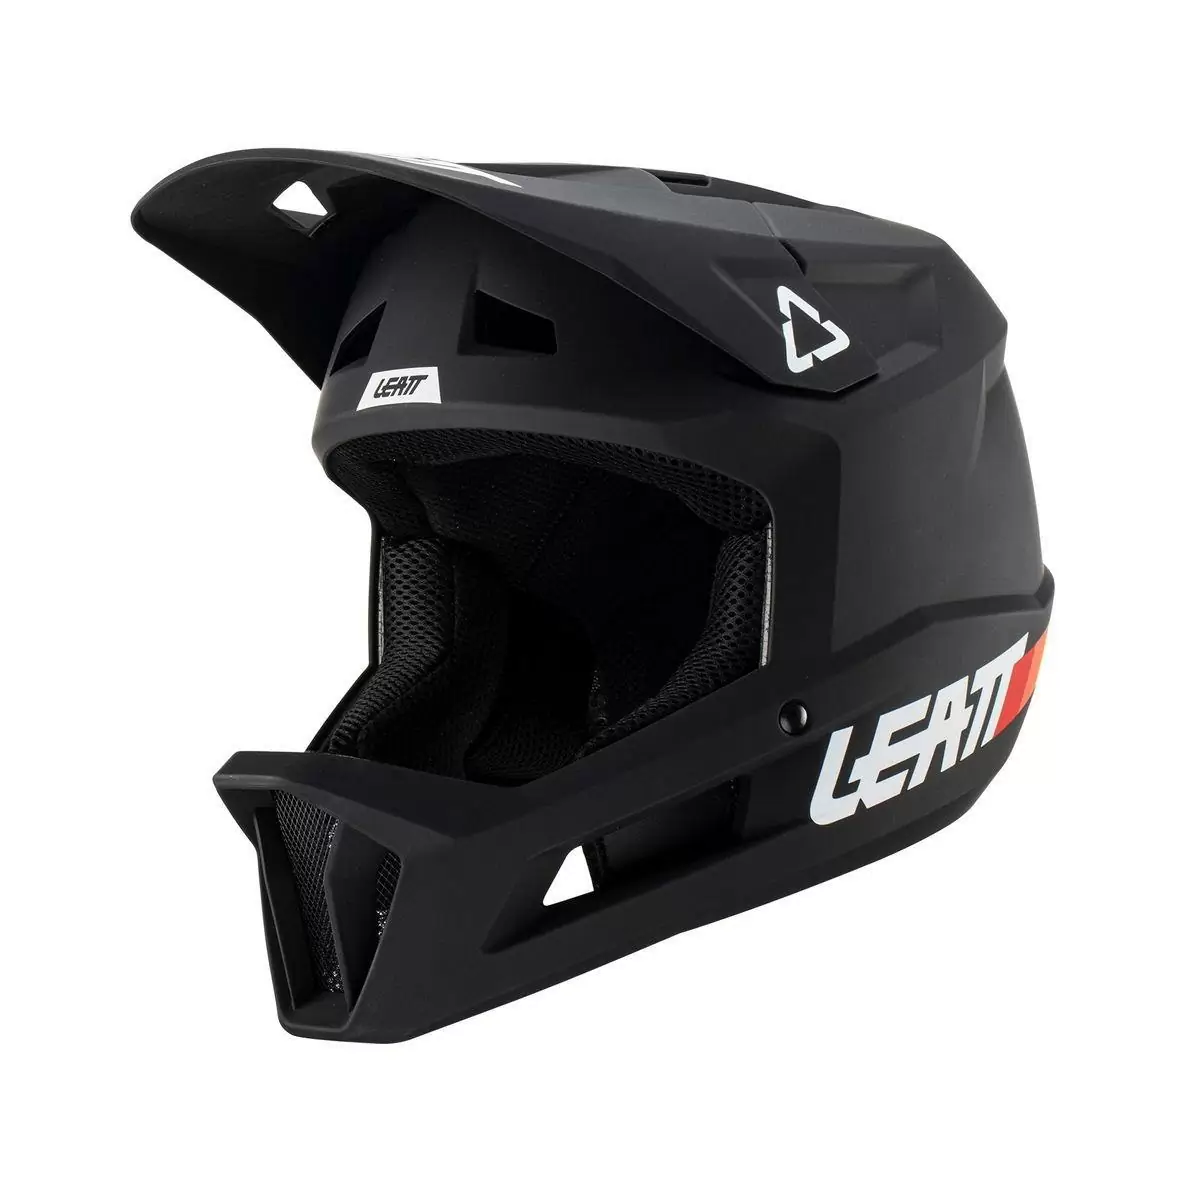 Gravity 1.0 MTB Fullface Helmet Stealth Black Size XS (53-54cm) - image